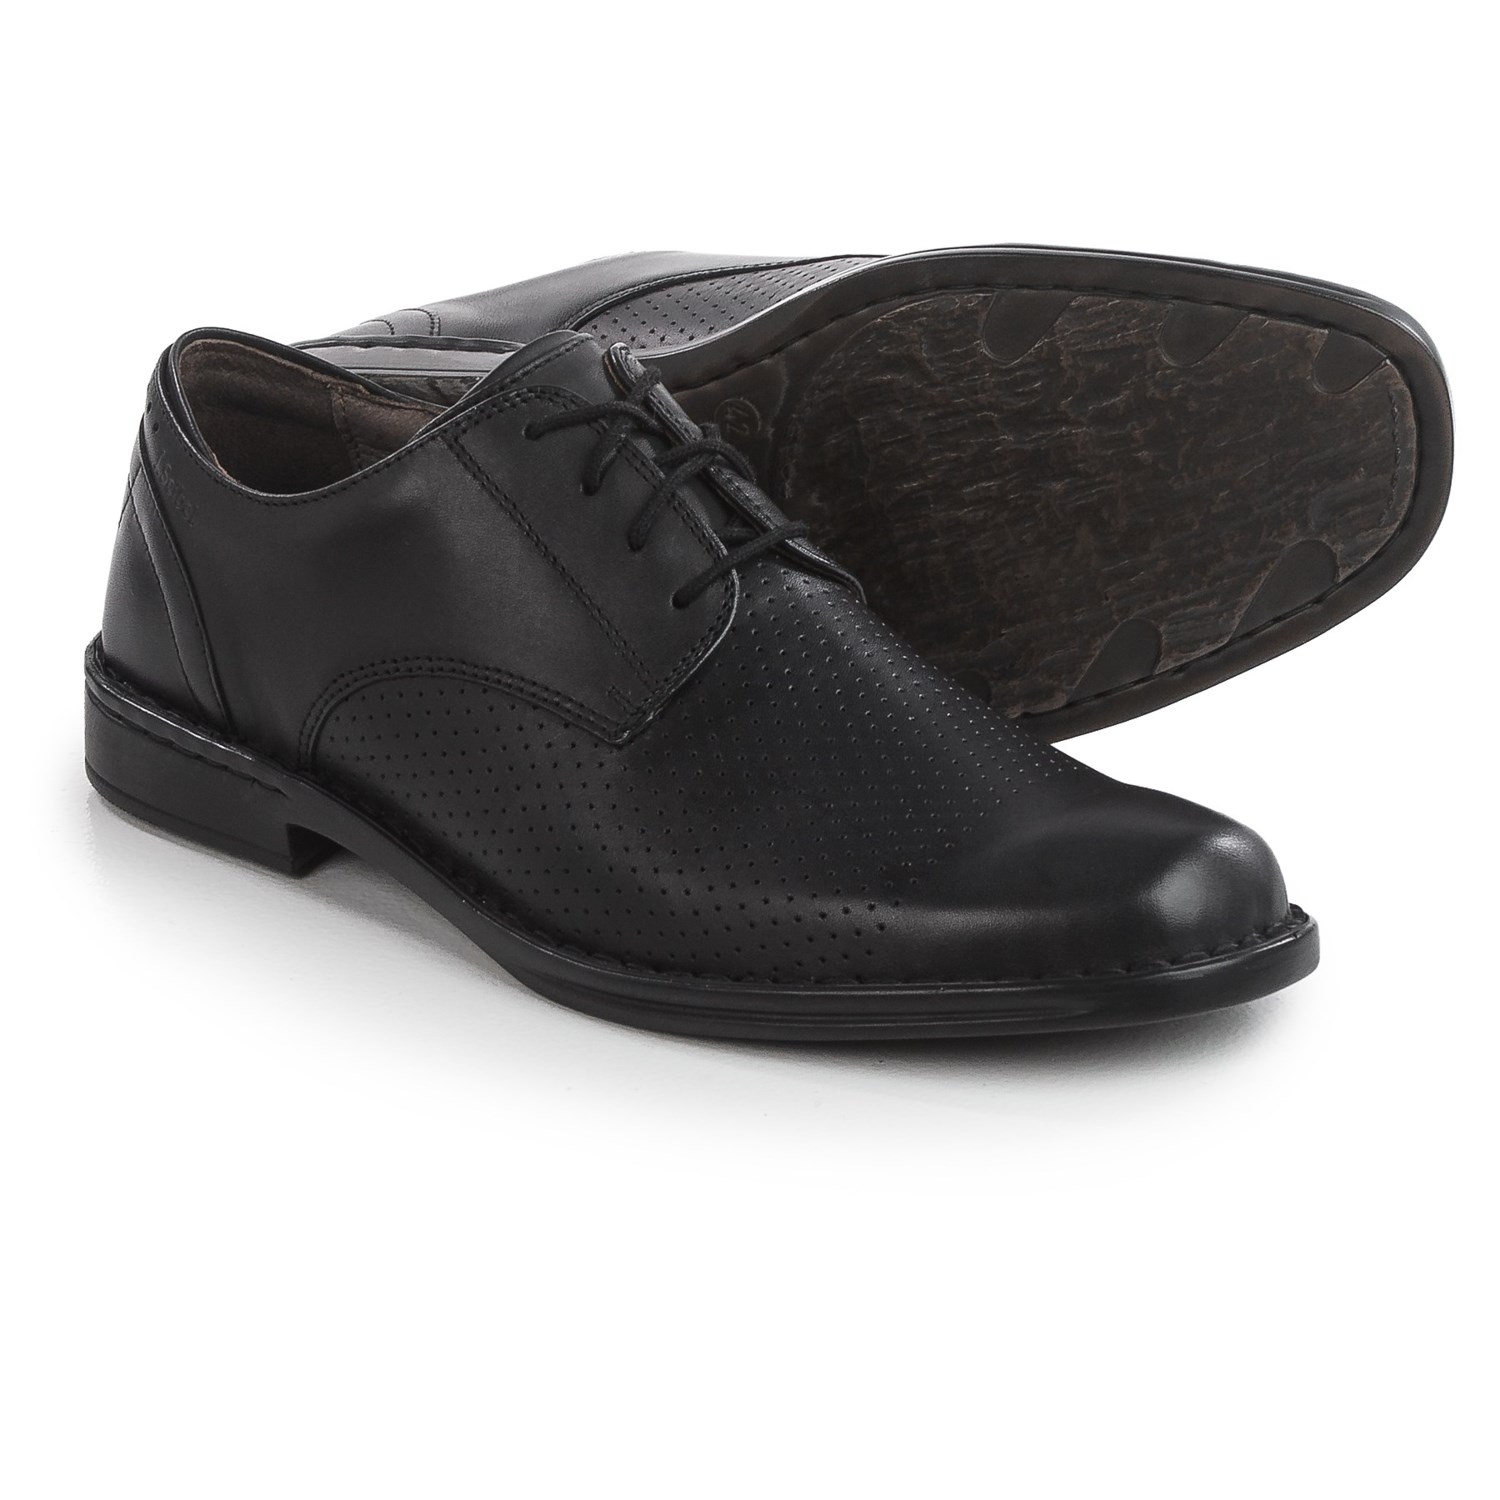 Josef Seibel Douglas 16 Oxford Shoes – Leather (For Men)